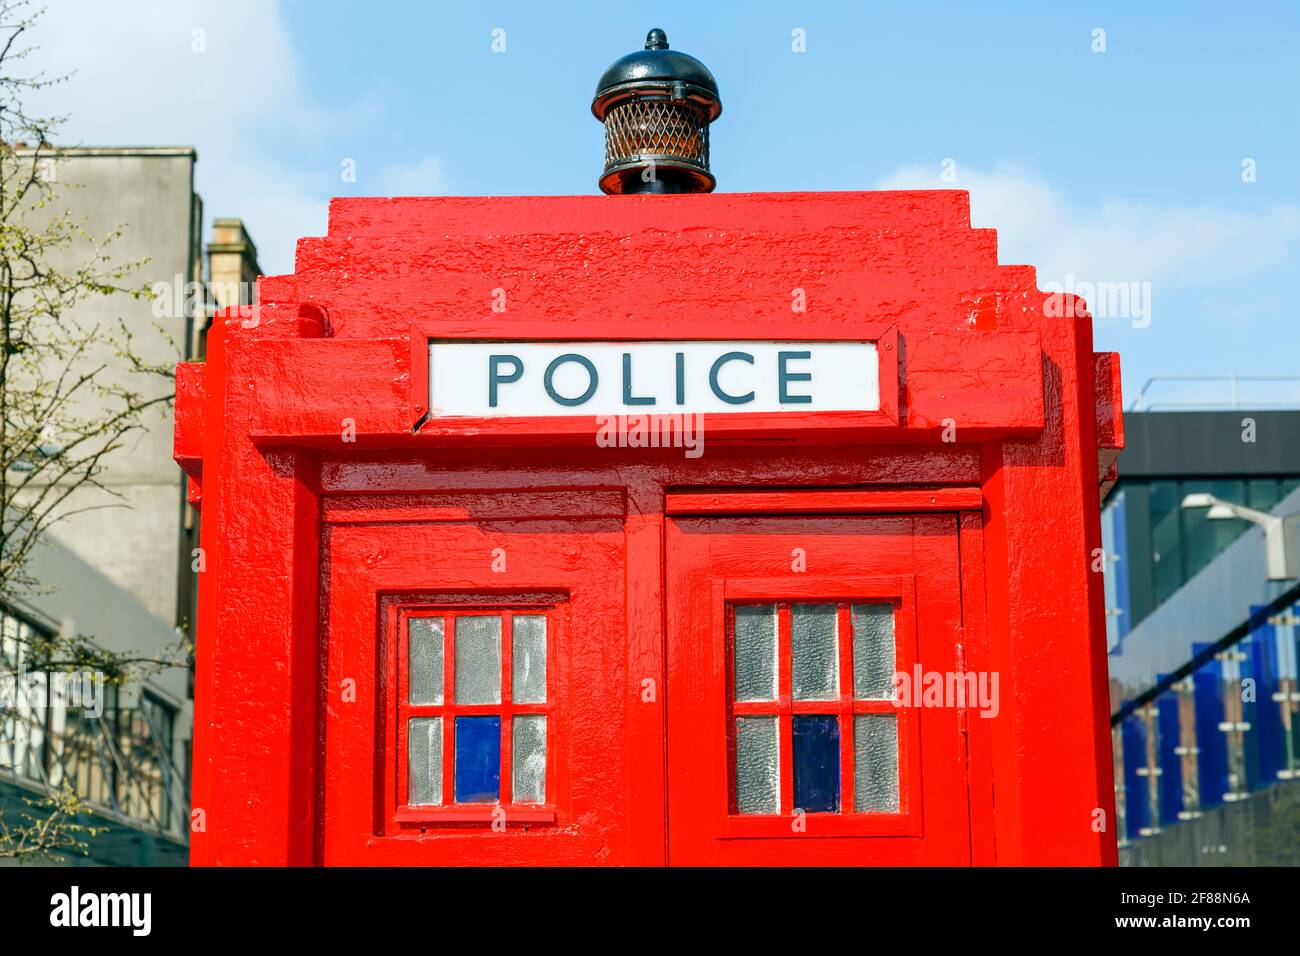 Police Phone Box painted red, Glasgow, Scotland, UK Stock Photo